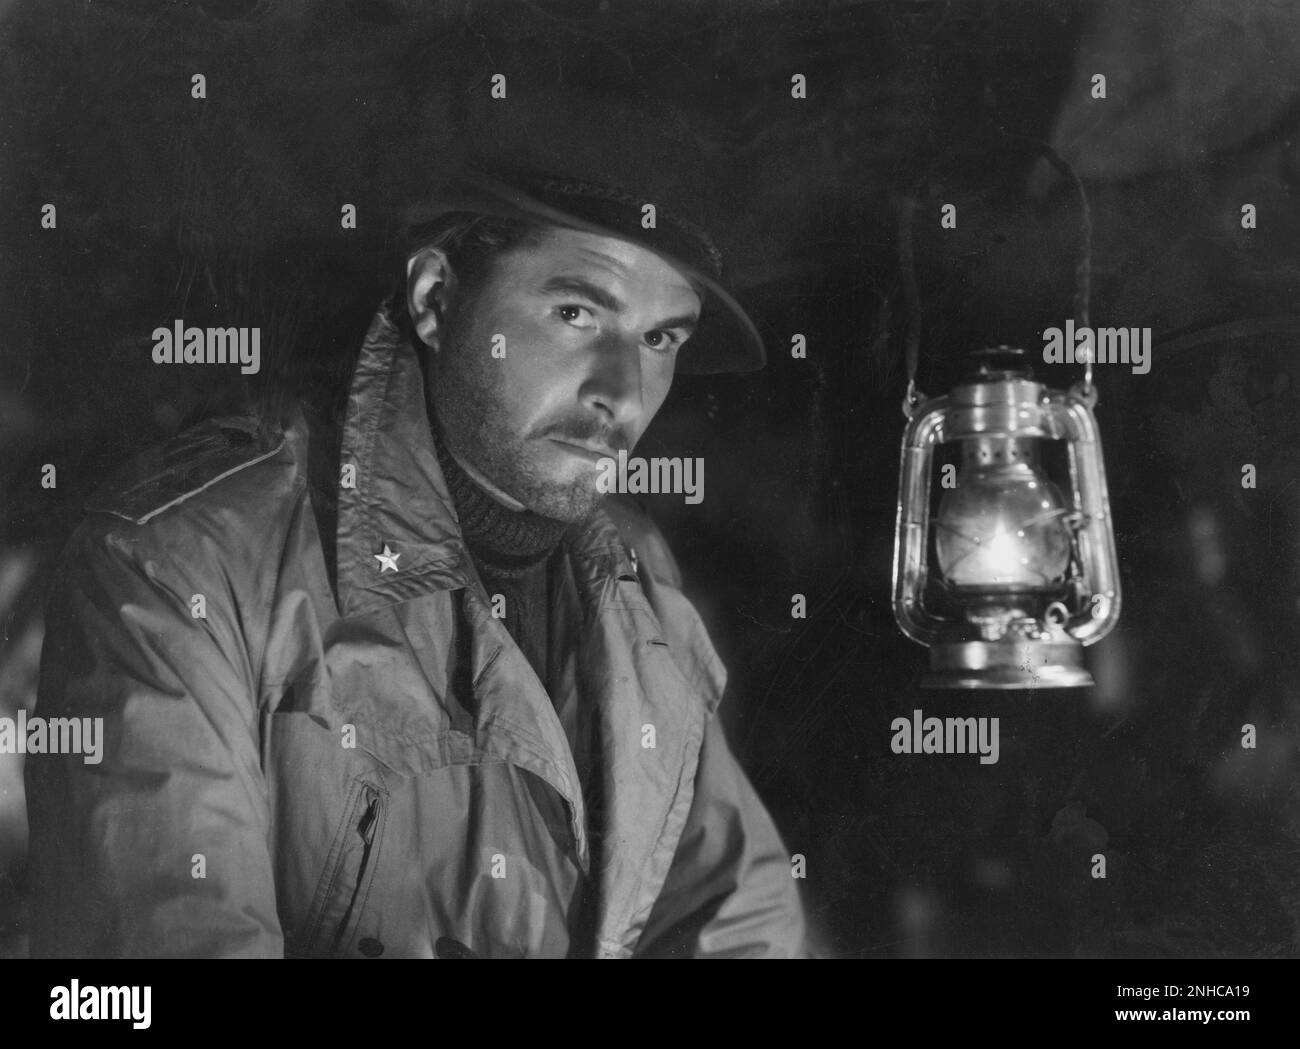 1943 , ITALIEN : der gefeierte italienische Filmschauspieler AMEDEO NAZZARI ( 1907 - 1979 ) In QUELLI DELLA MONTAGNA von Aldo Vergano - FILM - KINO - FILM - Hut - cappello da ALPINO - ALPINI - Militäruniform - uniforme divisa militare - lampada - Lampe - FASCISMO - FASCISTA - FASCHISTISCH - FASCHISMUS - Film di Propaganda --- Archivio GBB Stockfoto